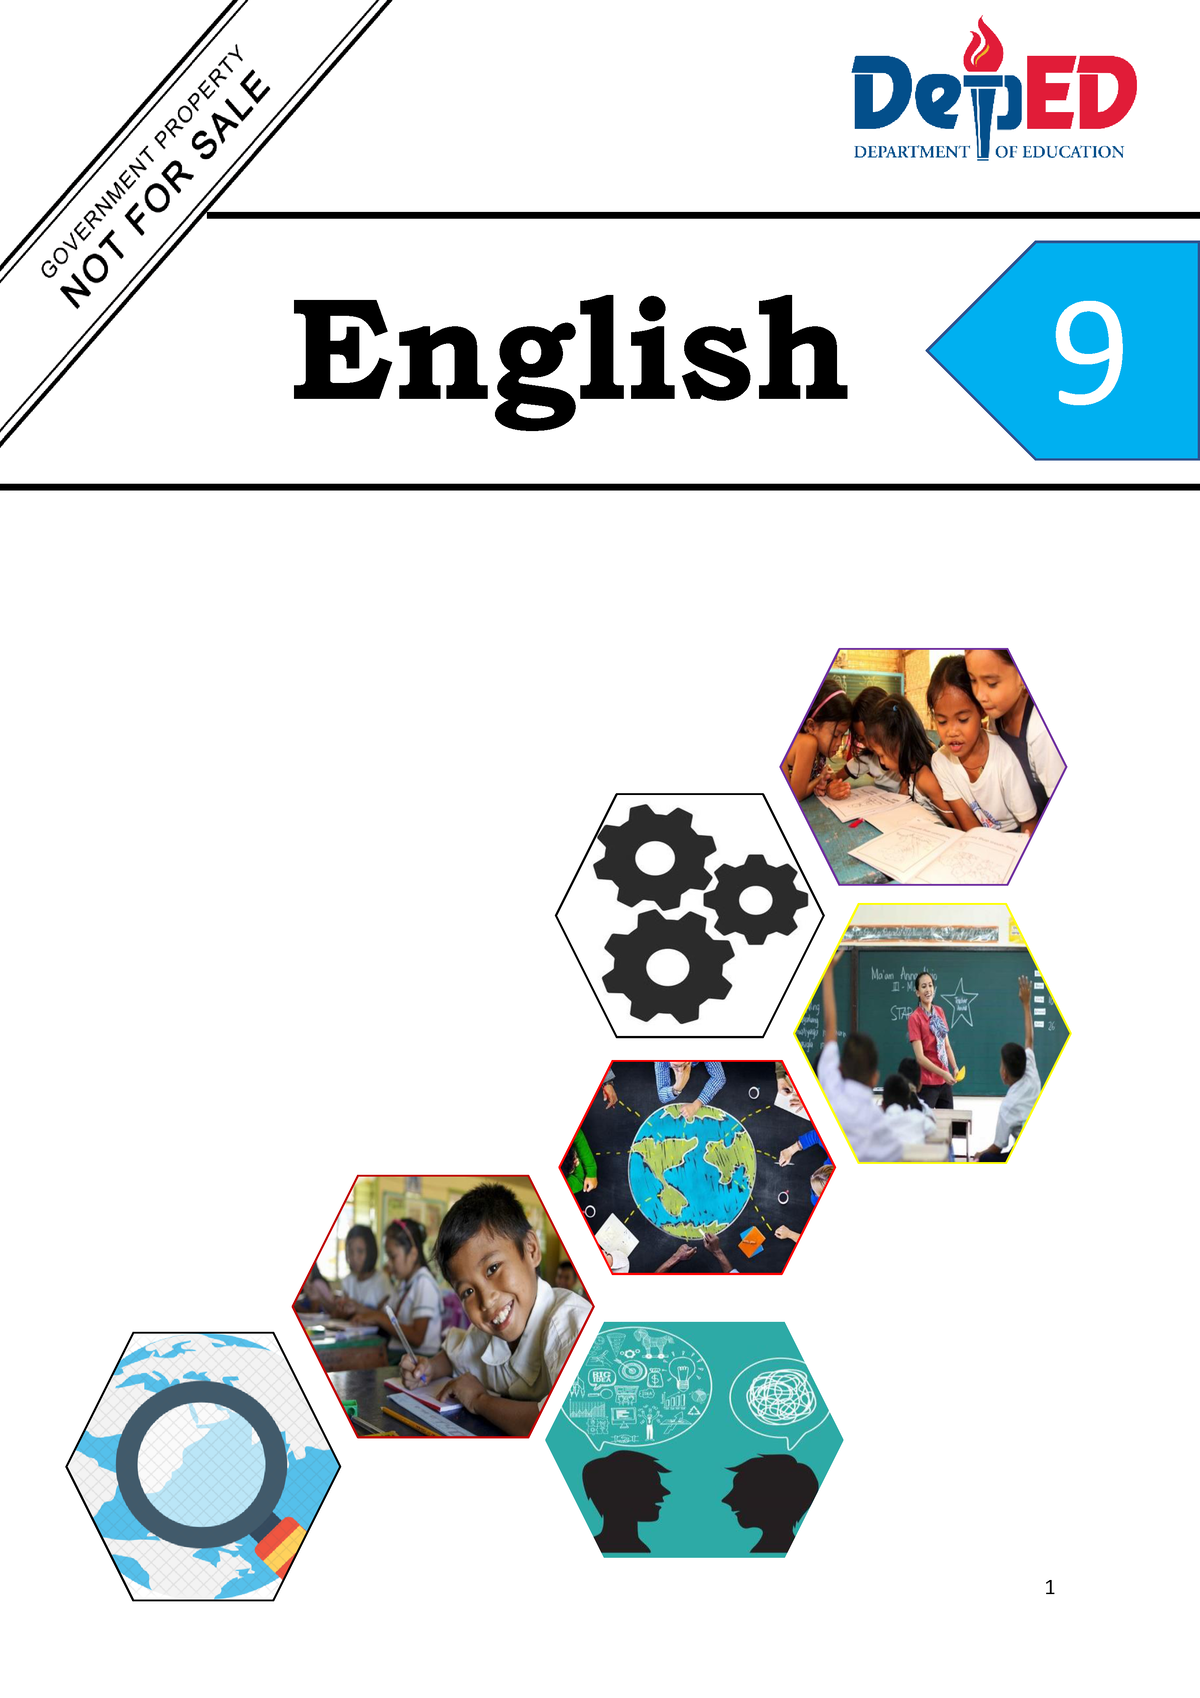 13-english-9th-grade-vocabulary-worksheets-worksheeto